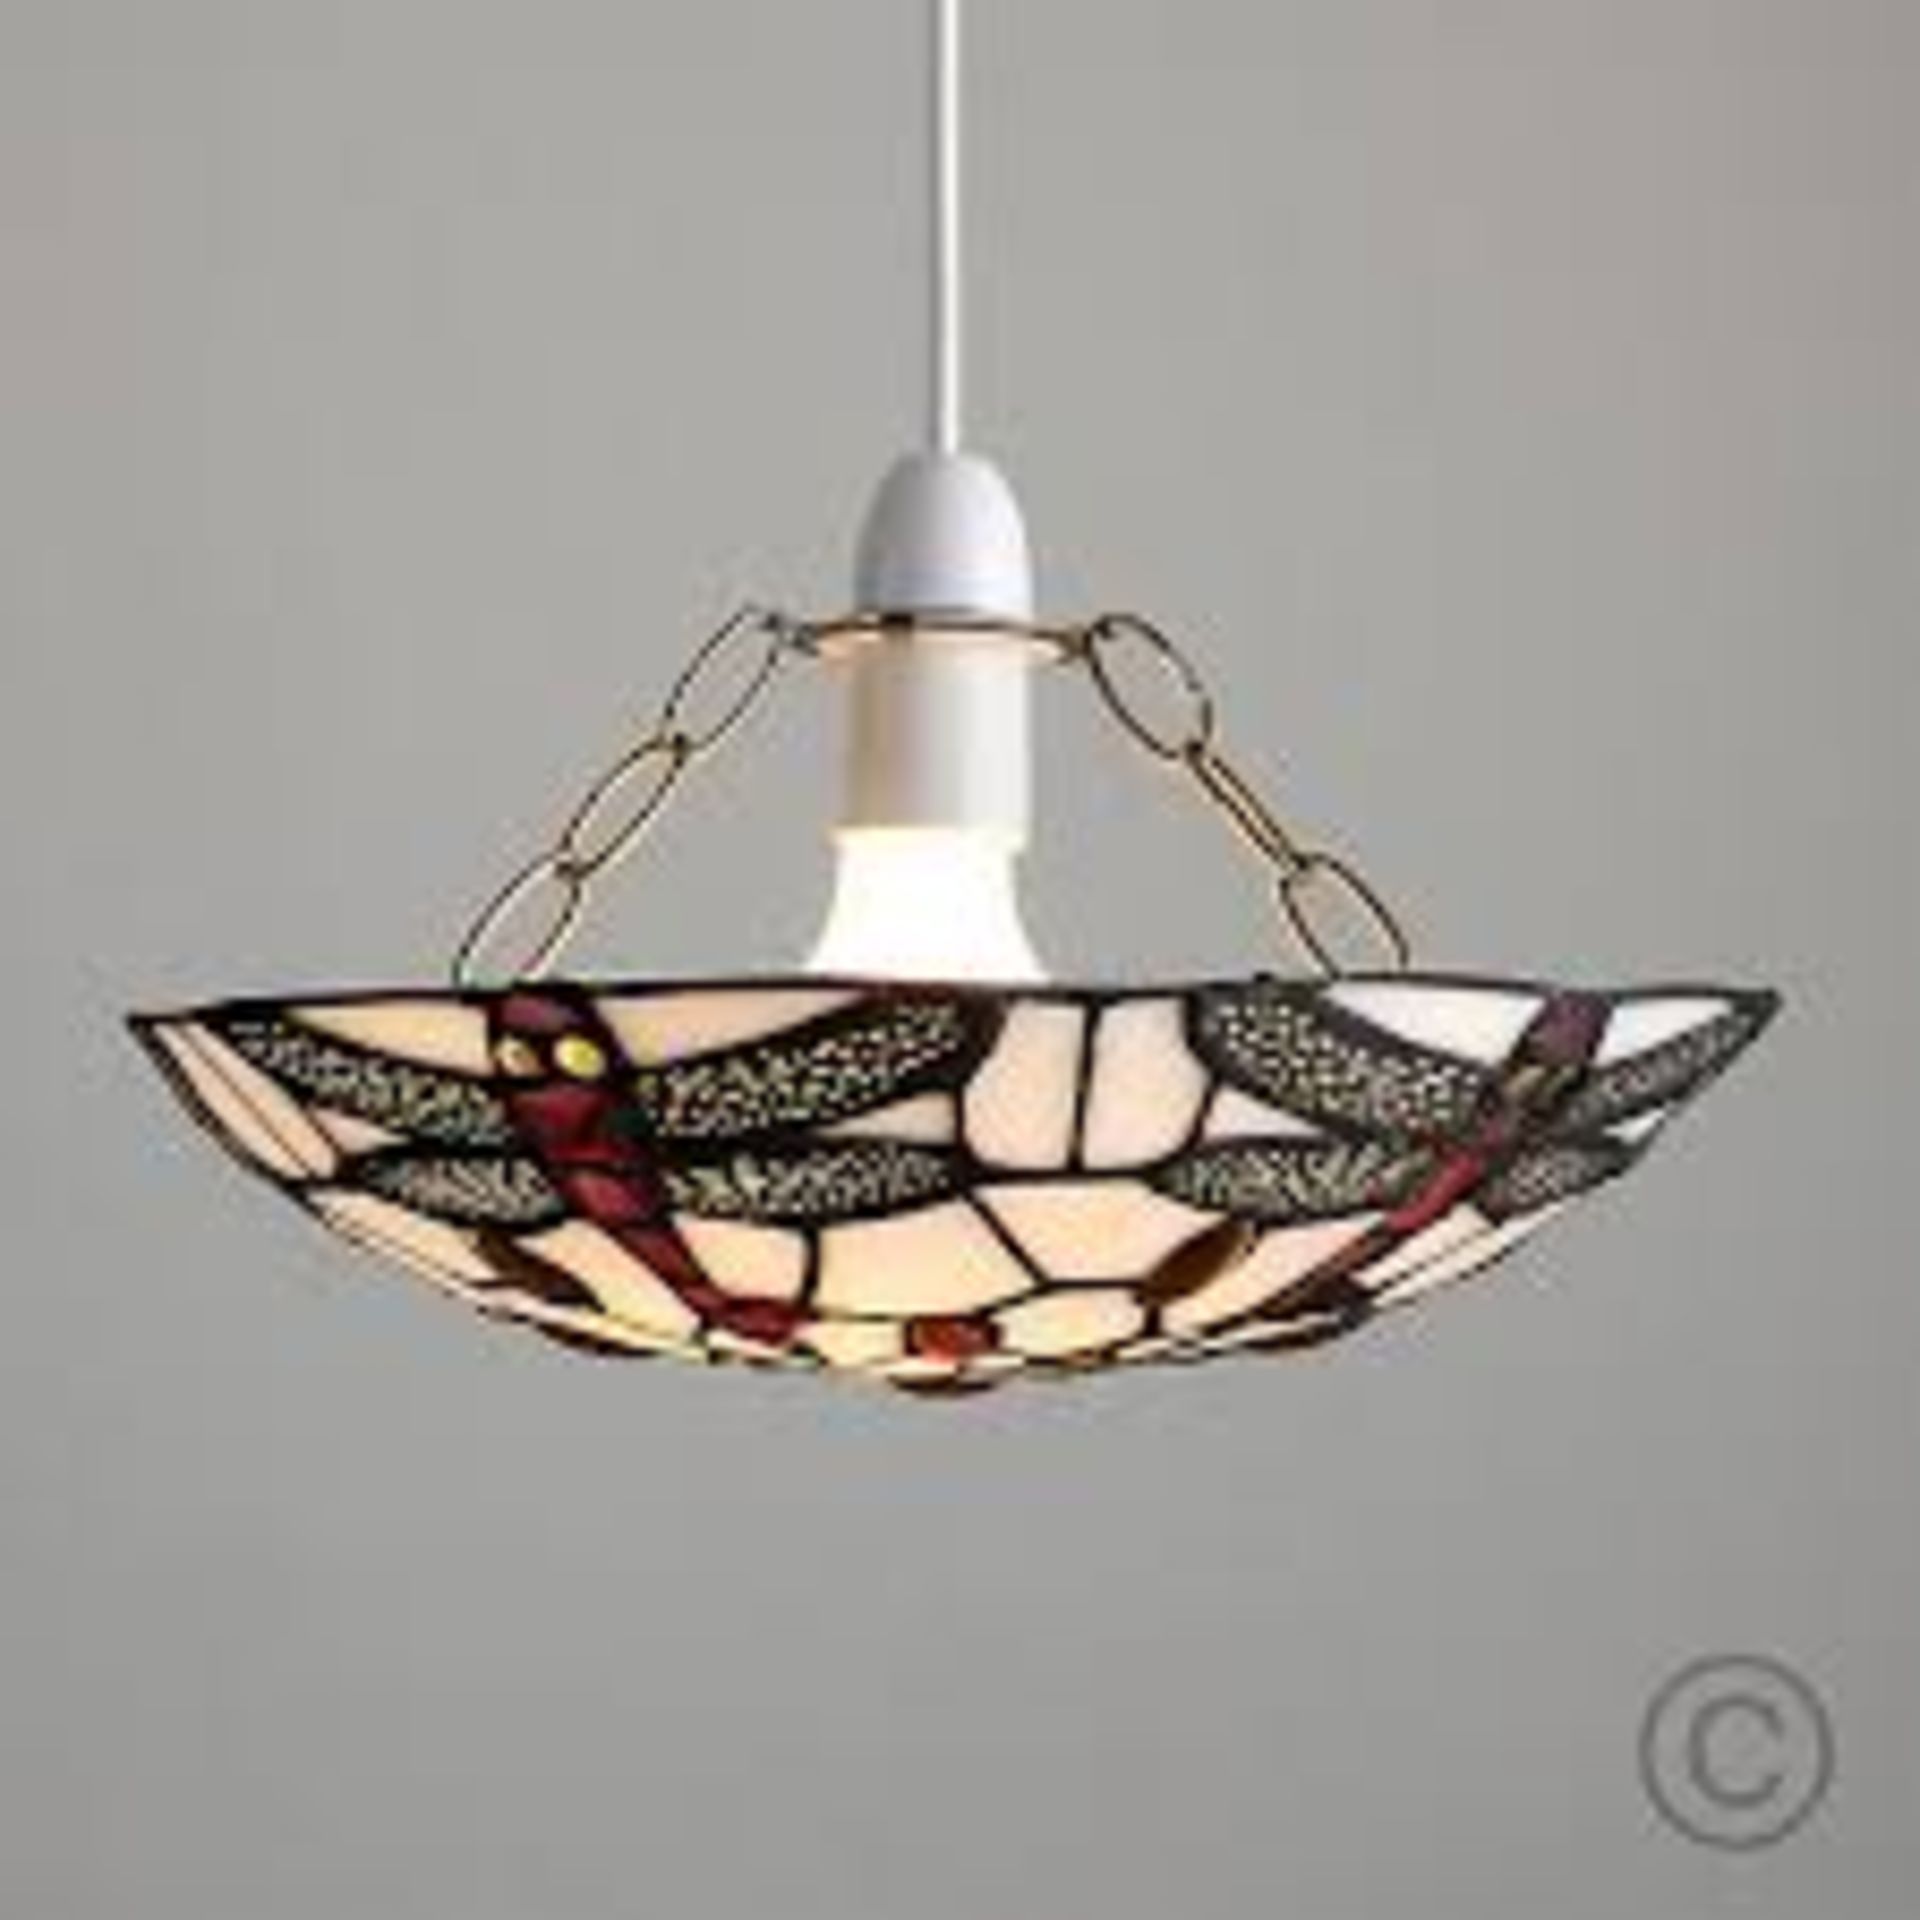 Tiffany Ceiling Pendant Light Shade - Dragonfly. - R14.9.